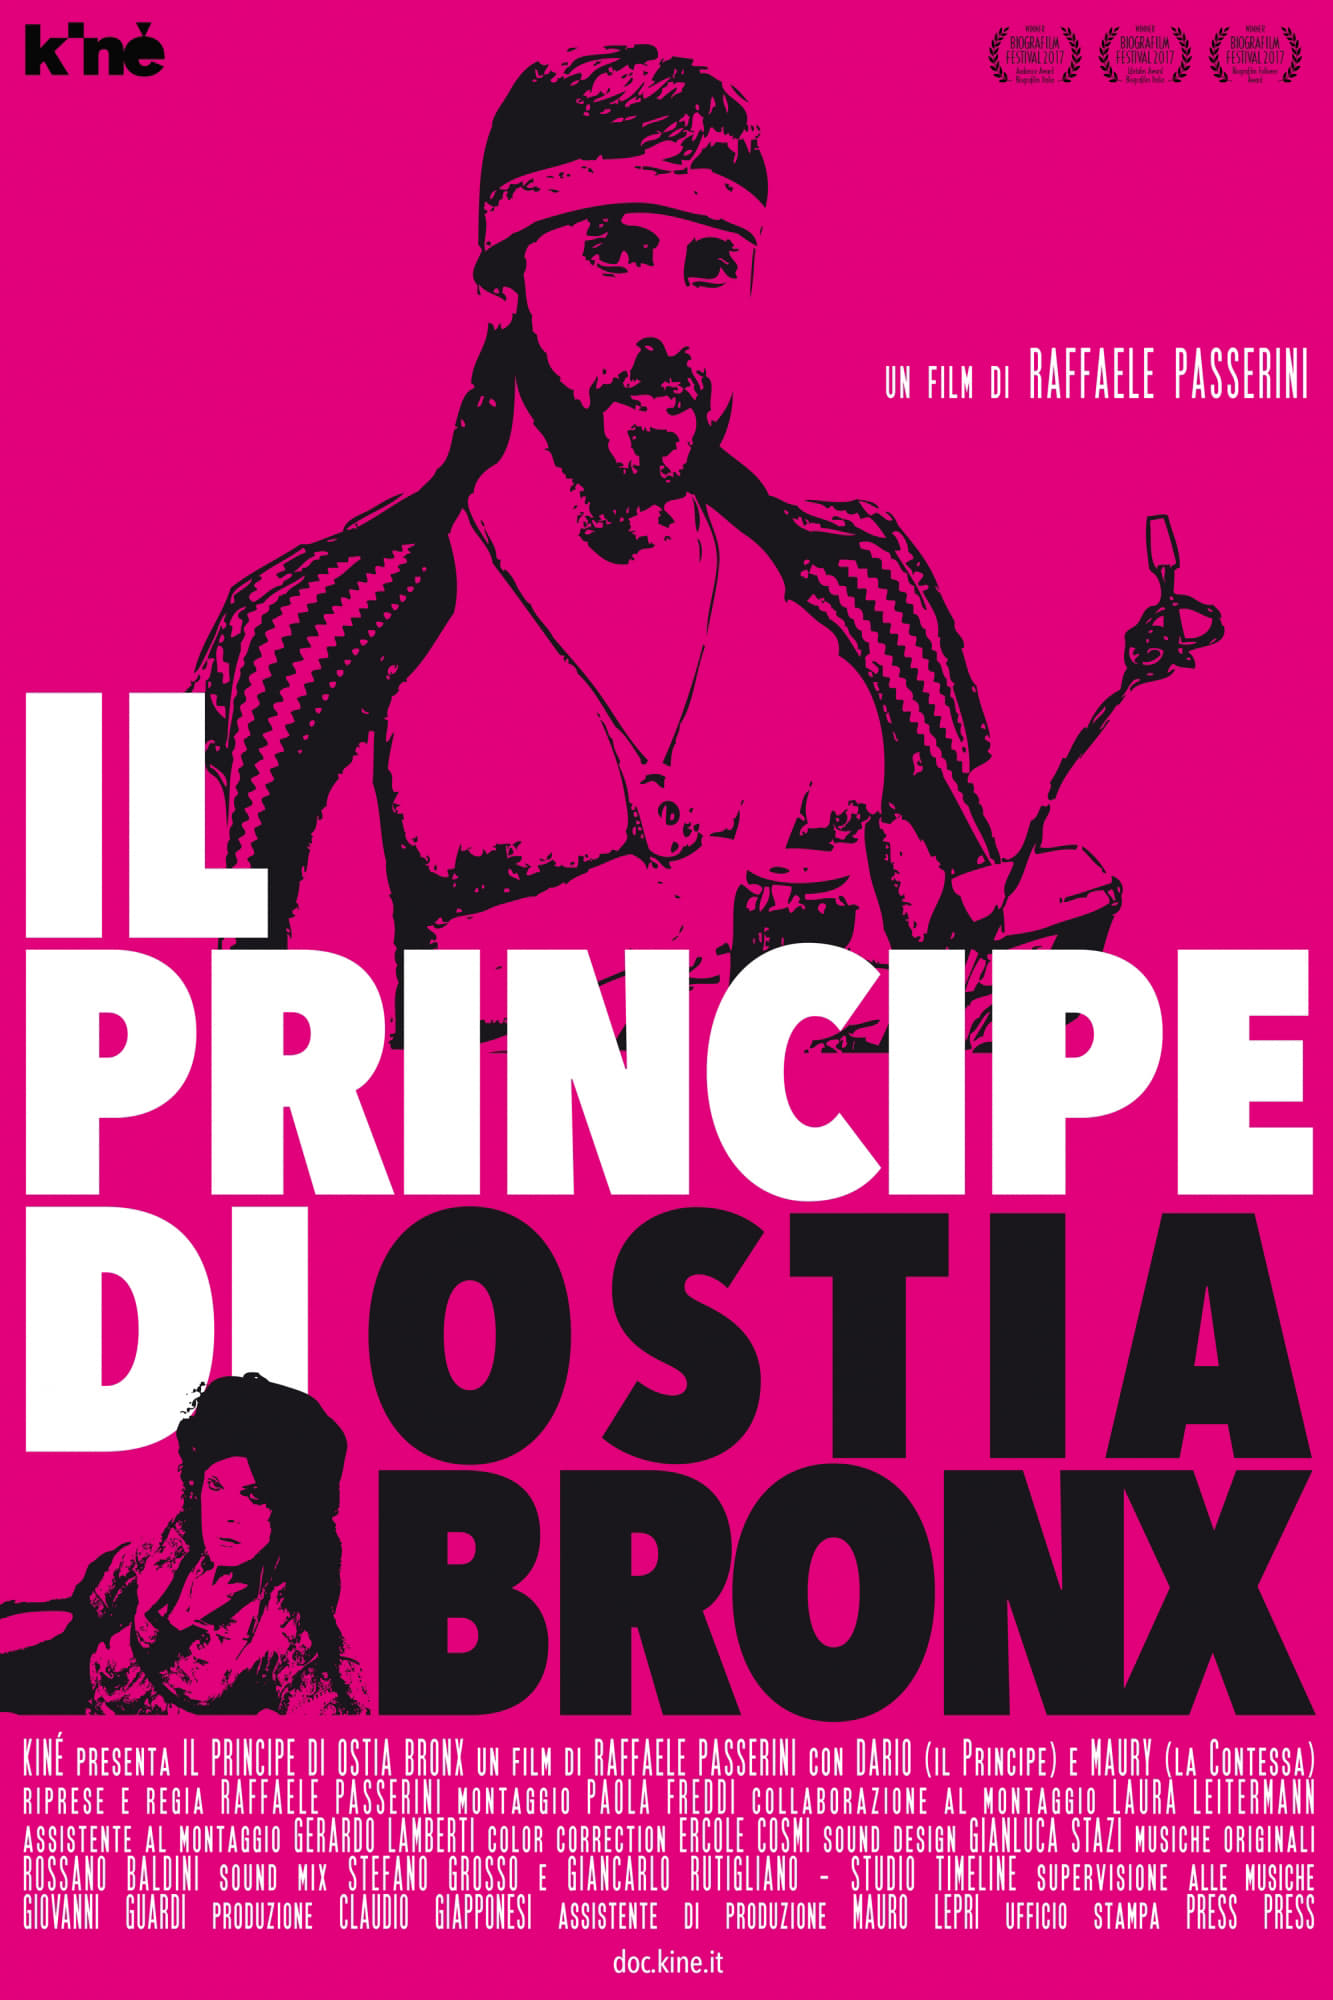 The Prince of Ostia Bronx